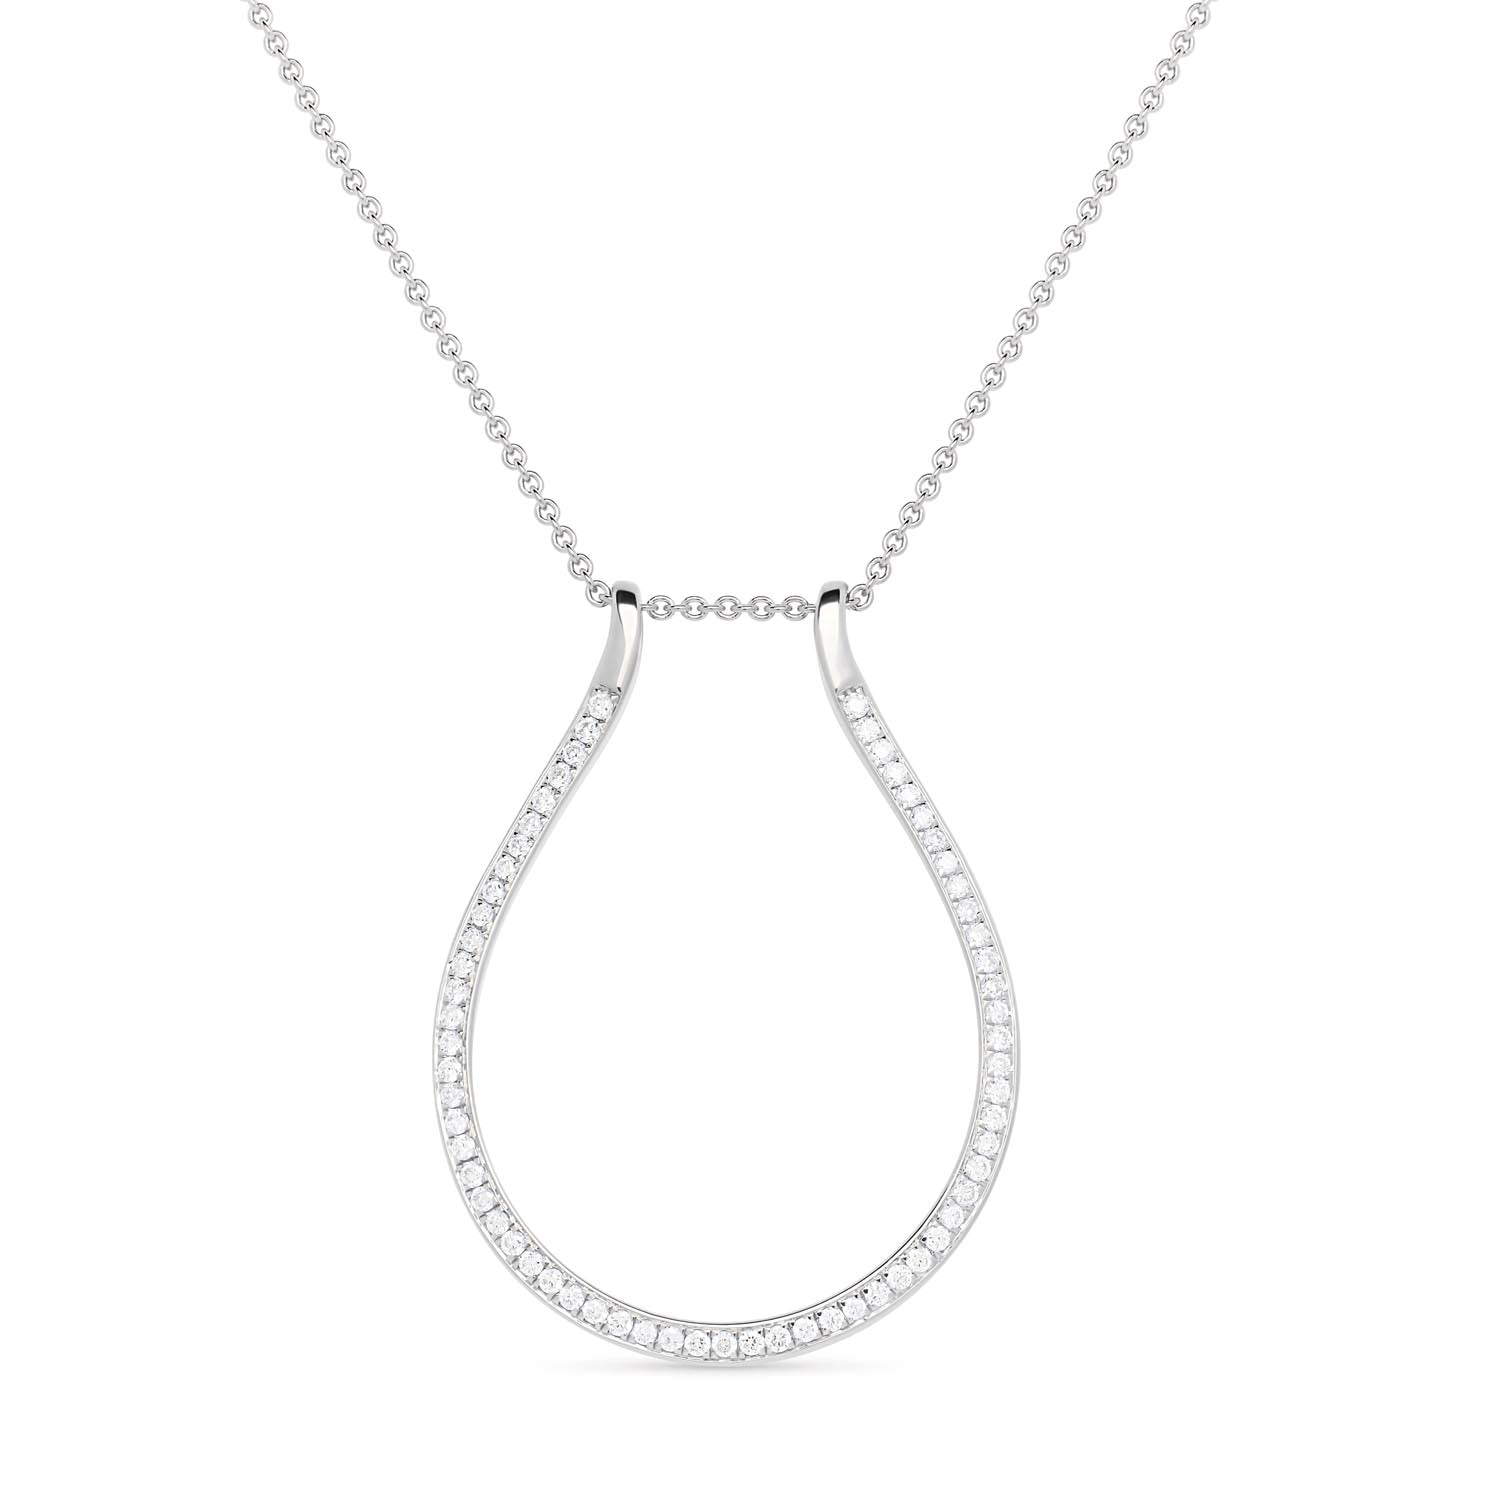 Ring Holder Diamond Necklace - White Gold